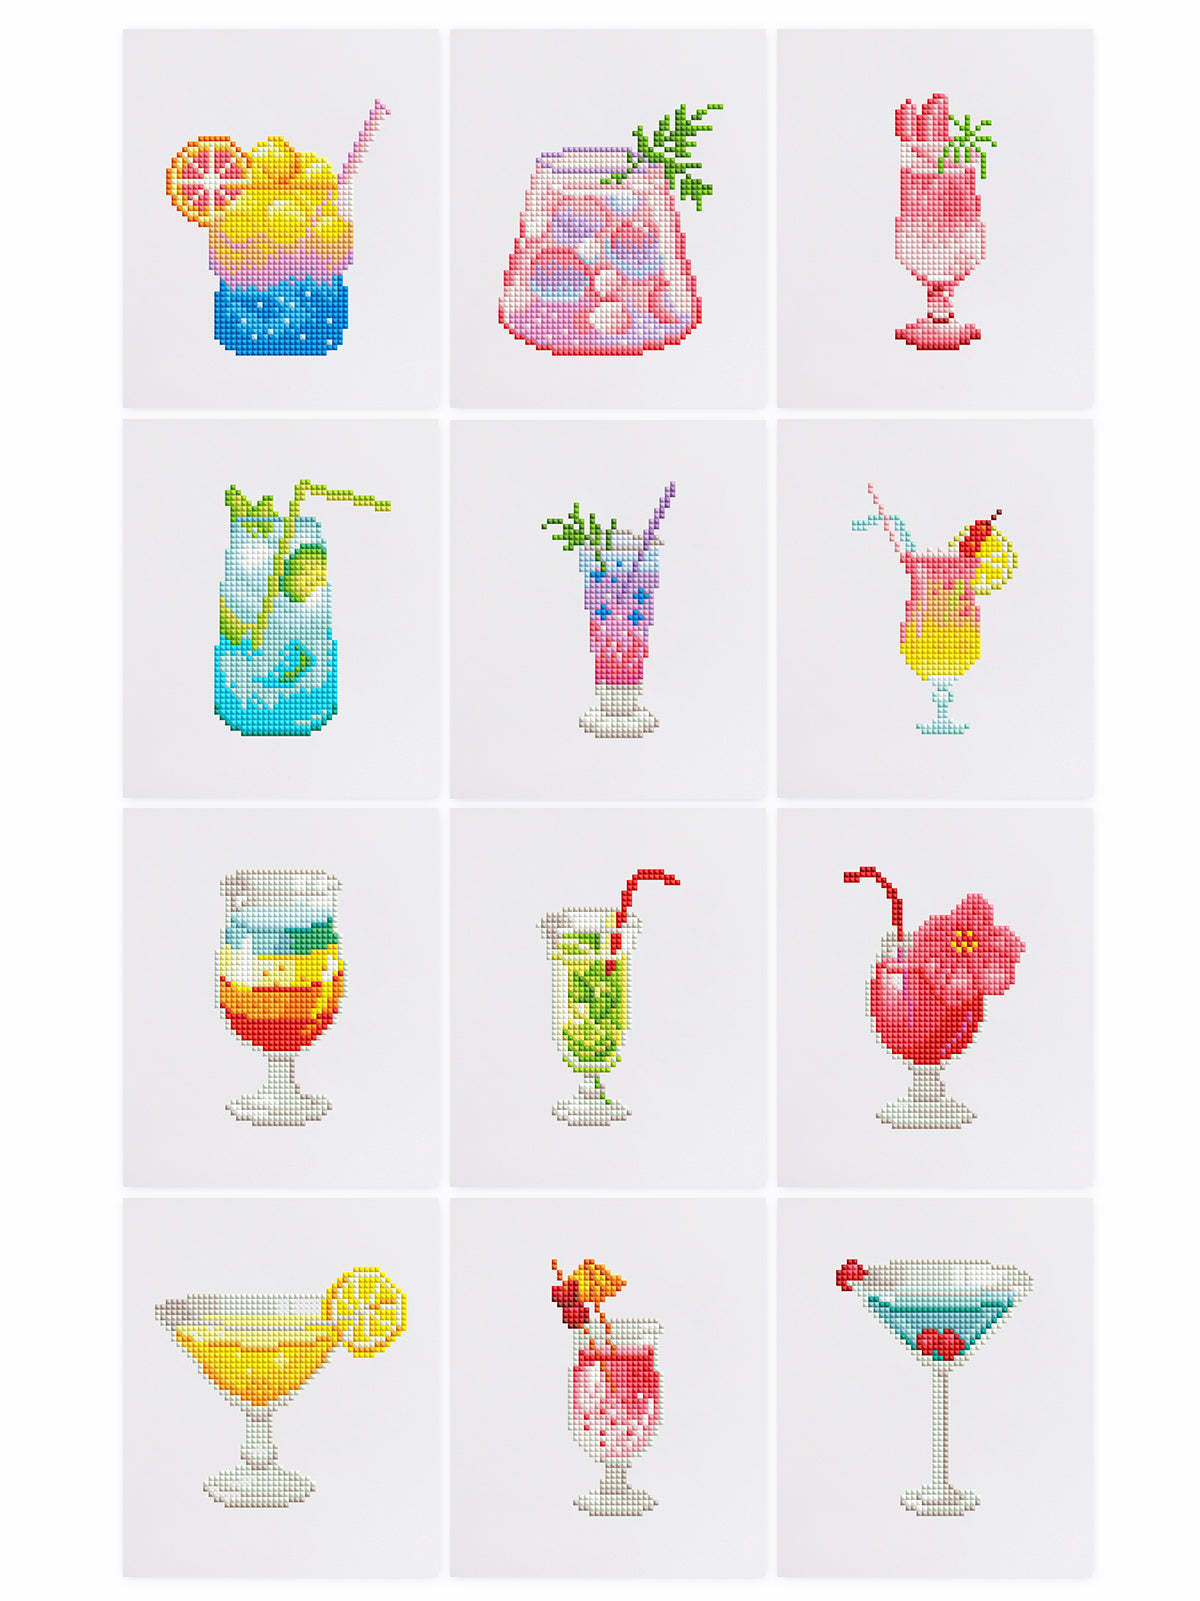 Cocktails Edition